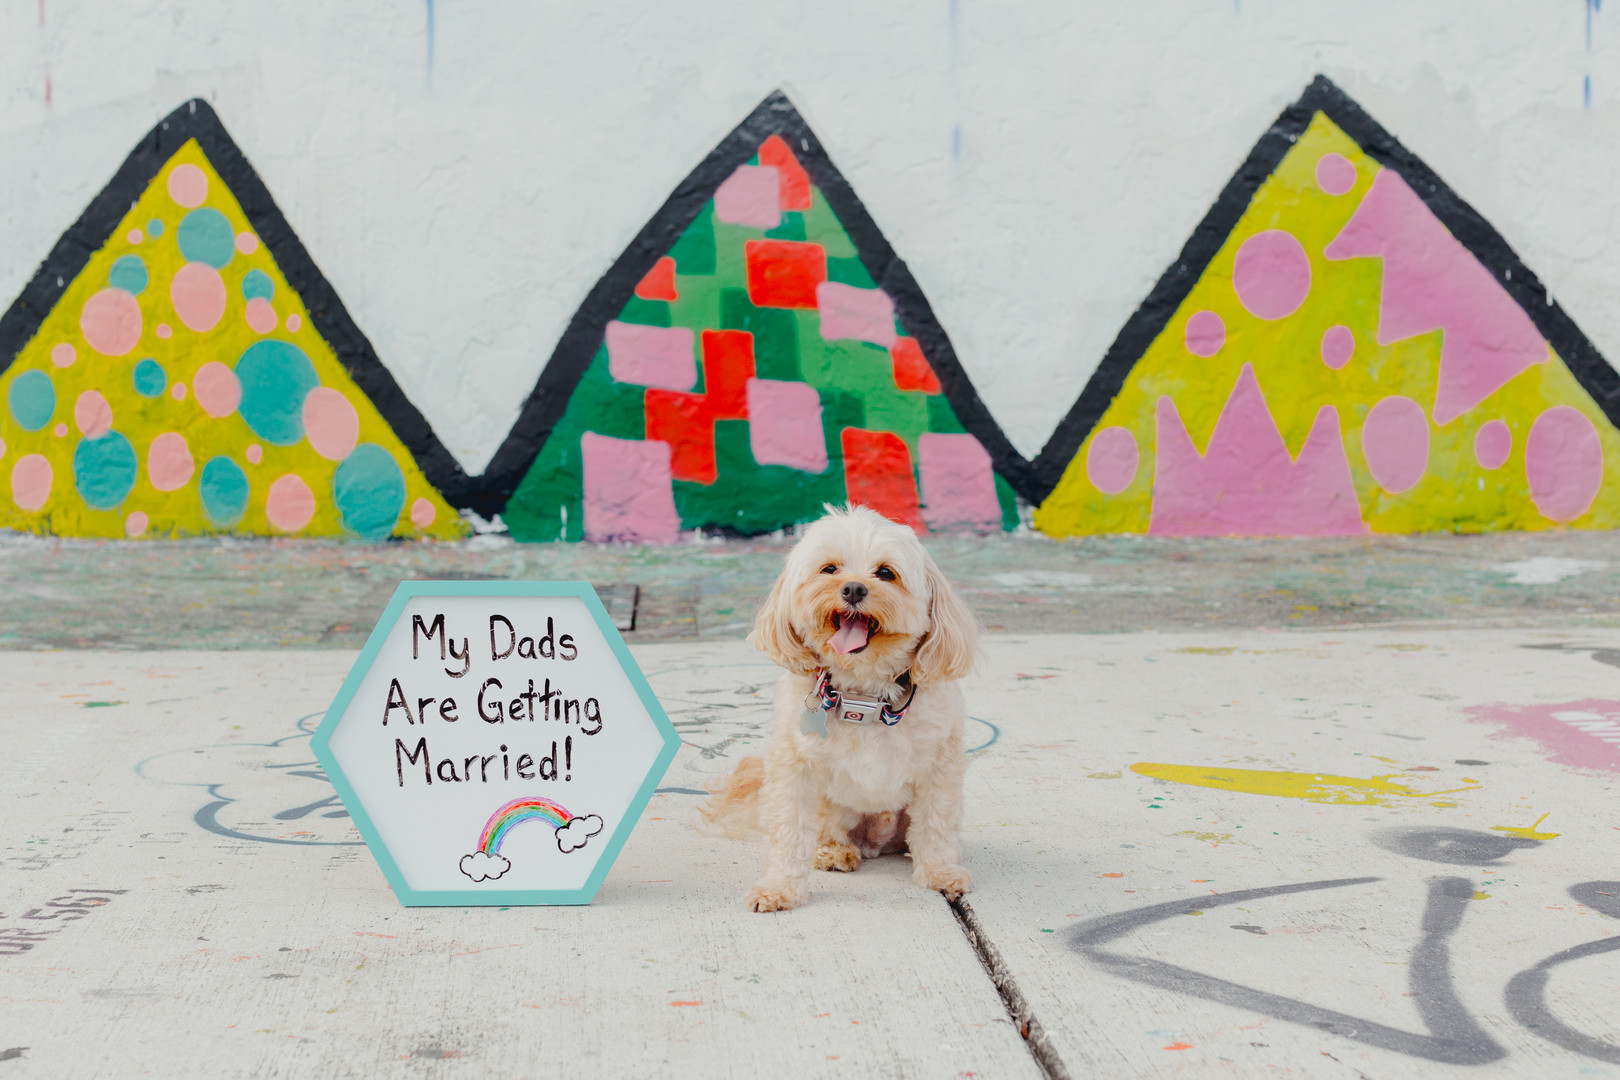 Fun, colorful arcade engagement photos two grooms street art Miami, Florida art district graffiti casual dog dads